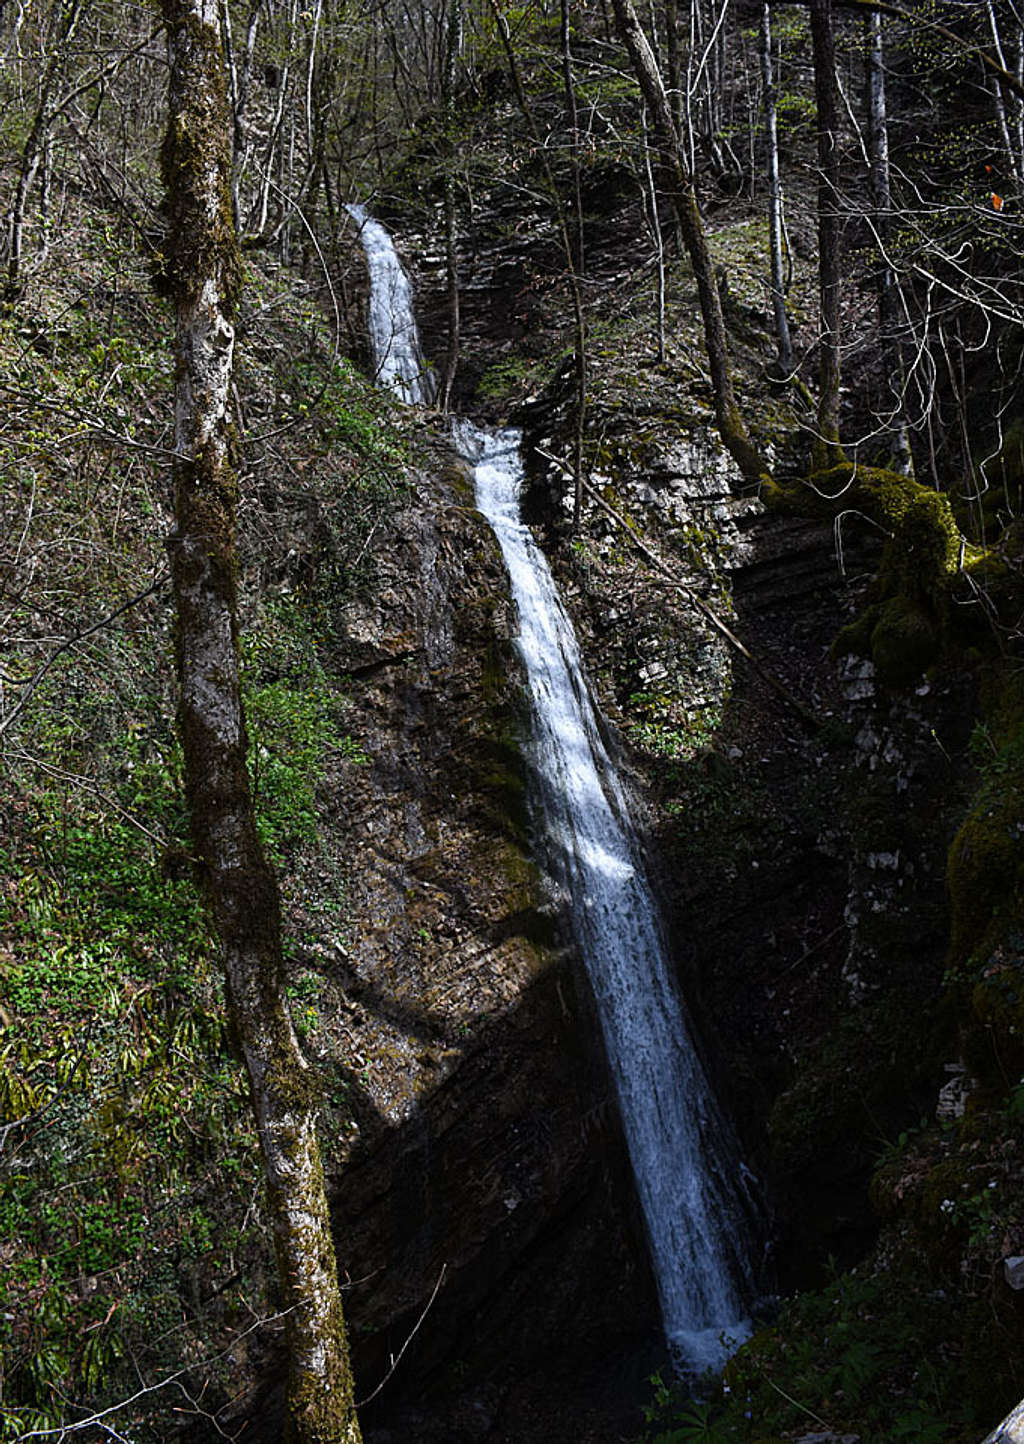 Stopnik Waterfalls 2 and 3